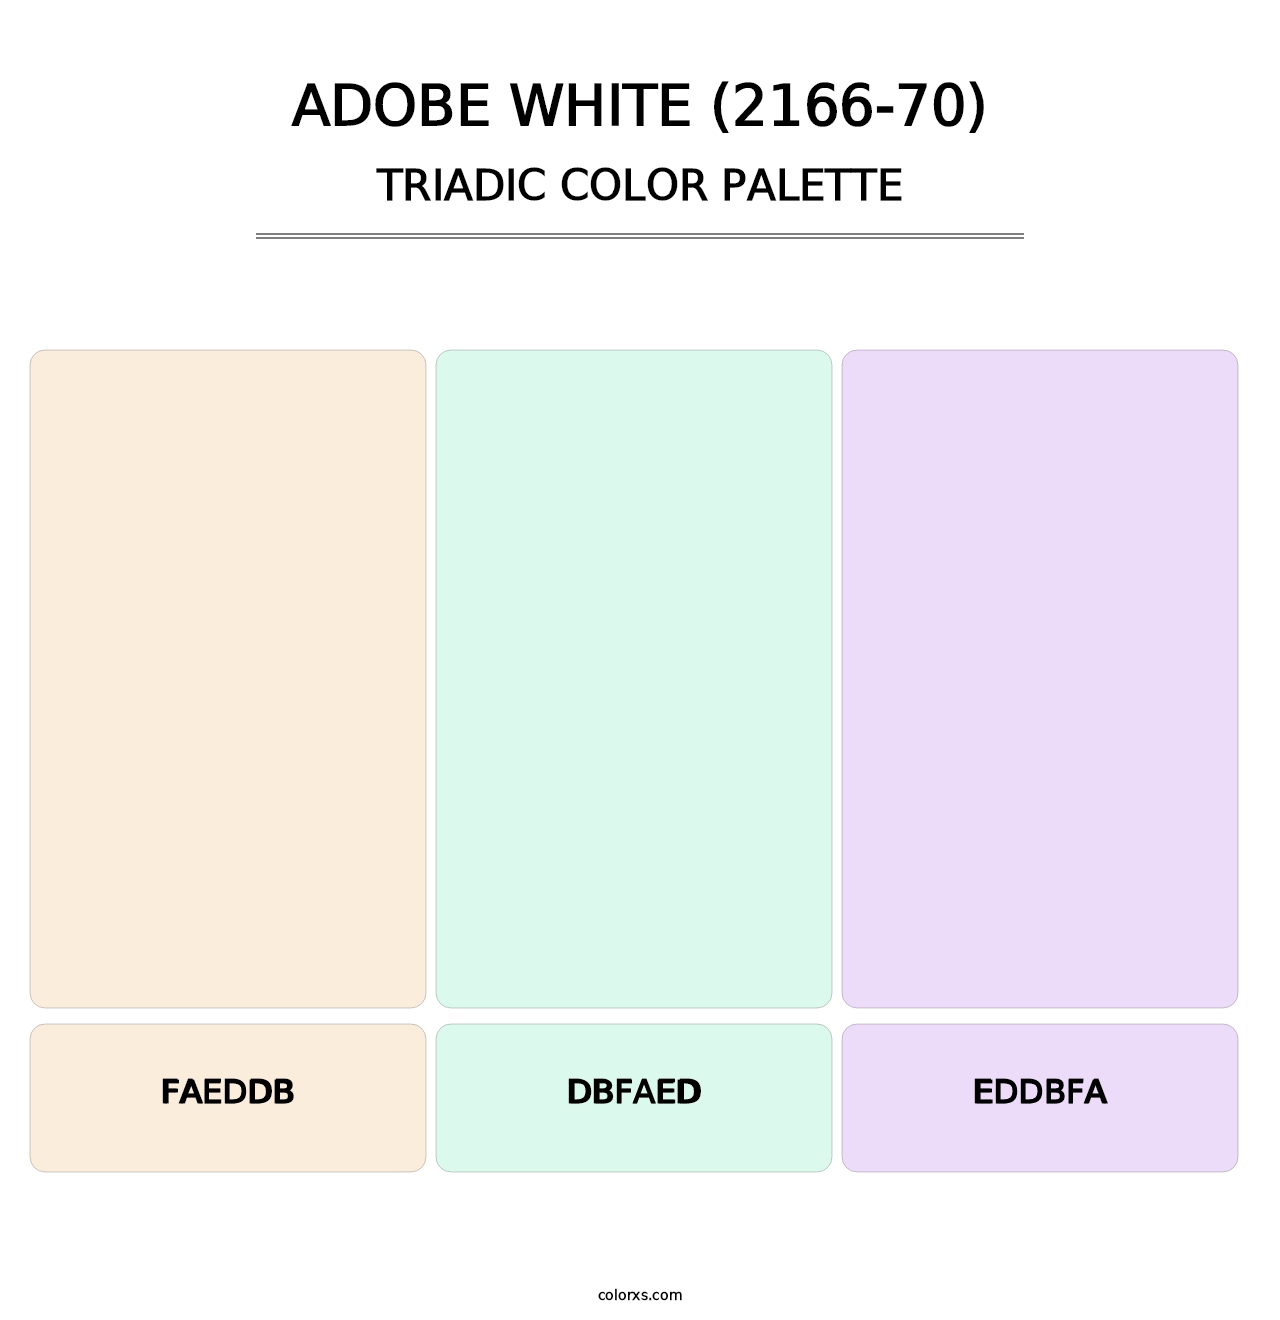 Adobe White (2166-70) - Triadic Color Palette